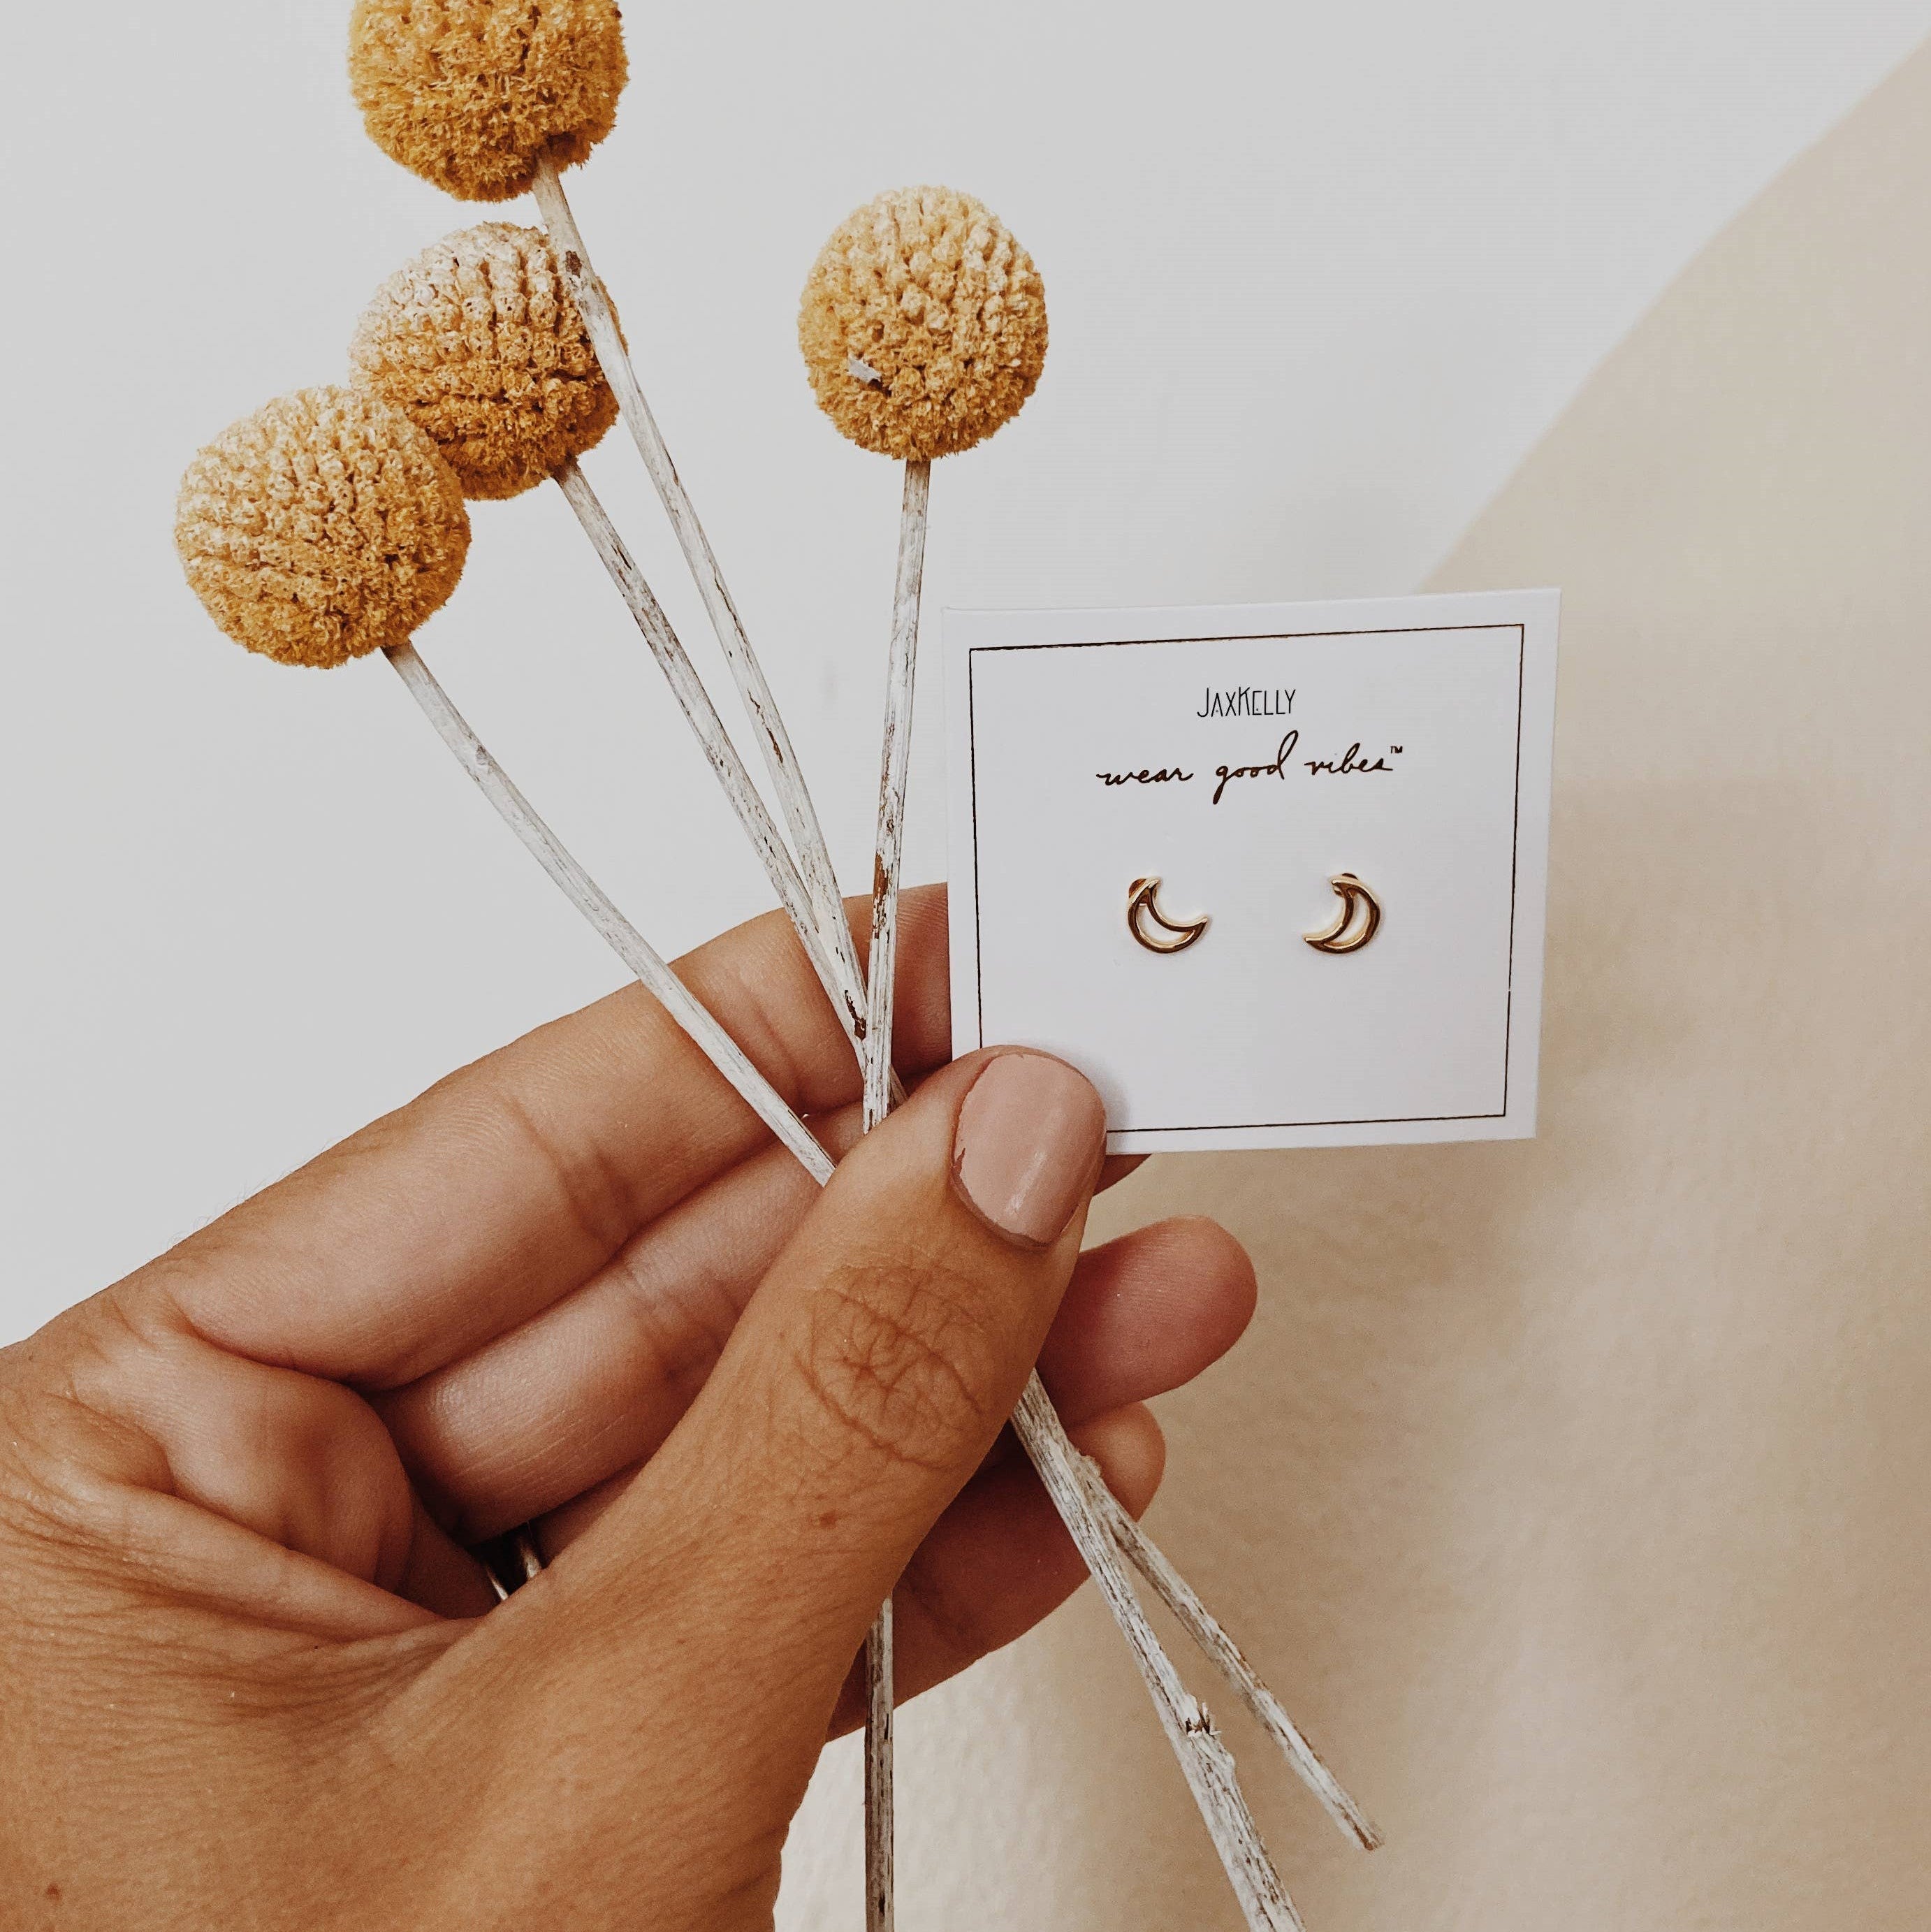 The Minimalist Moon Stud Earrings by JaxKelly